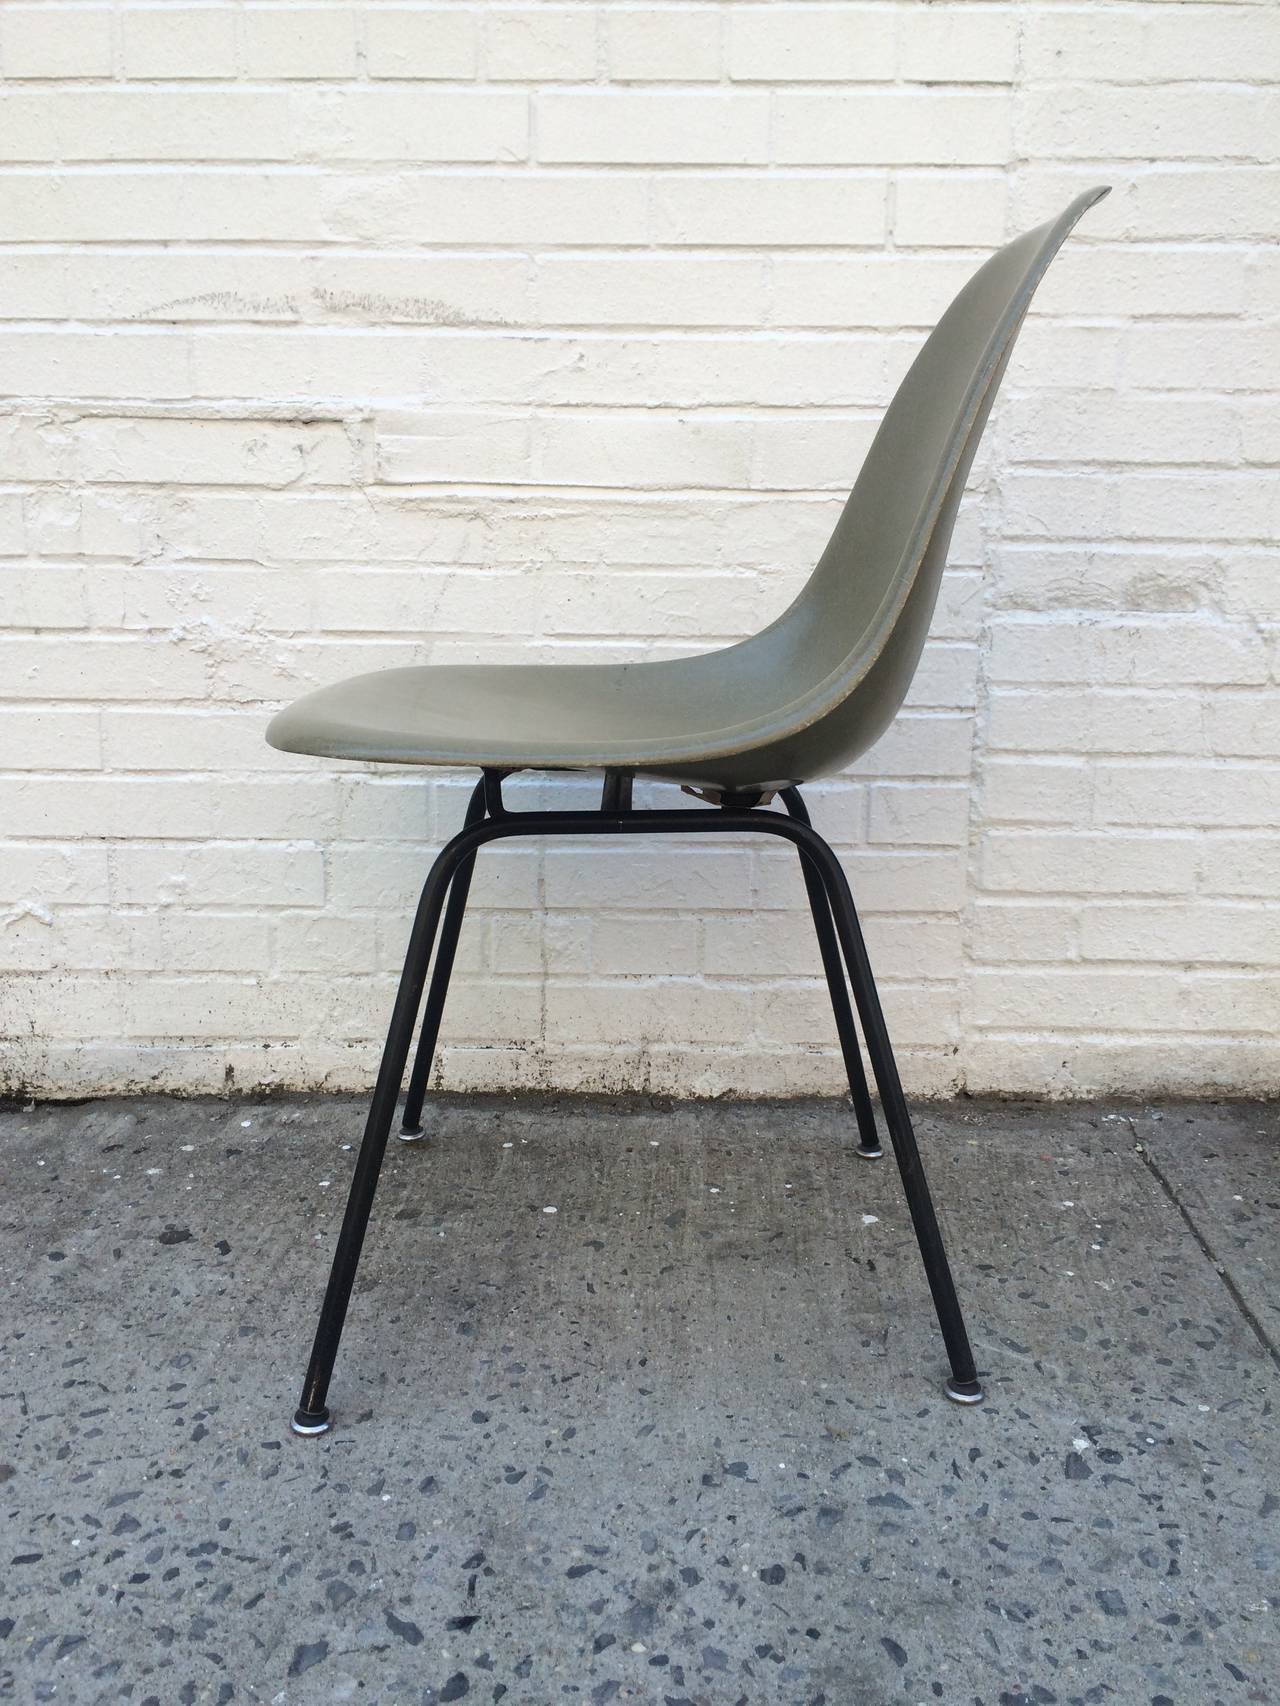 American Eames Herman Miller Raw Umber Fiberglass Chair For Sale